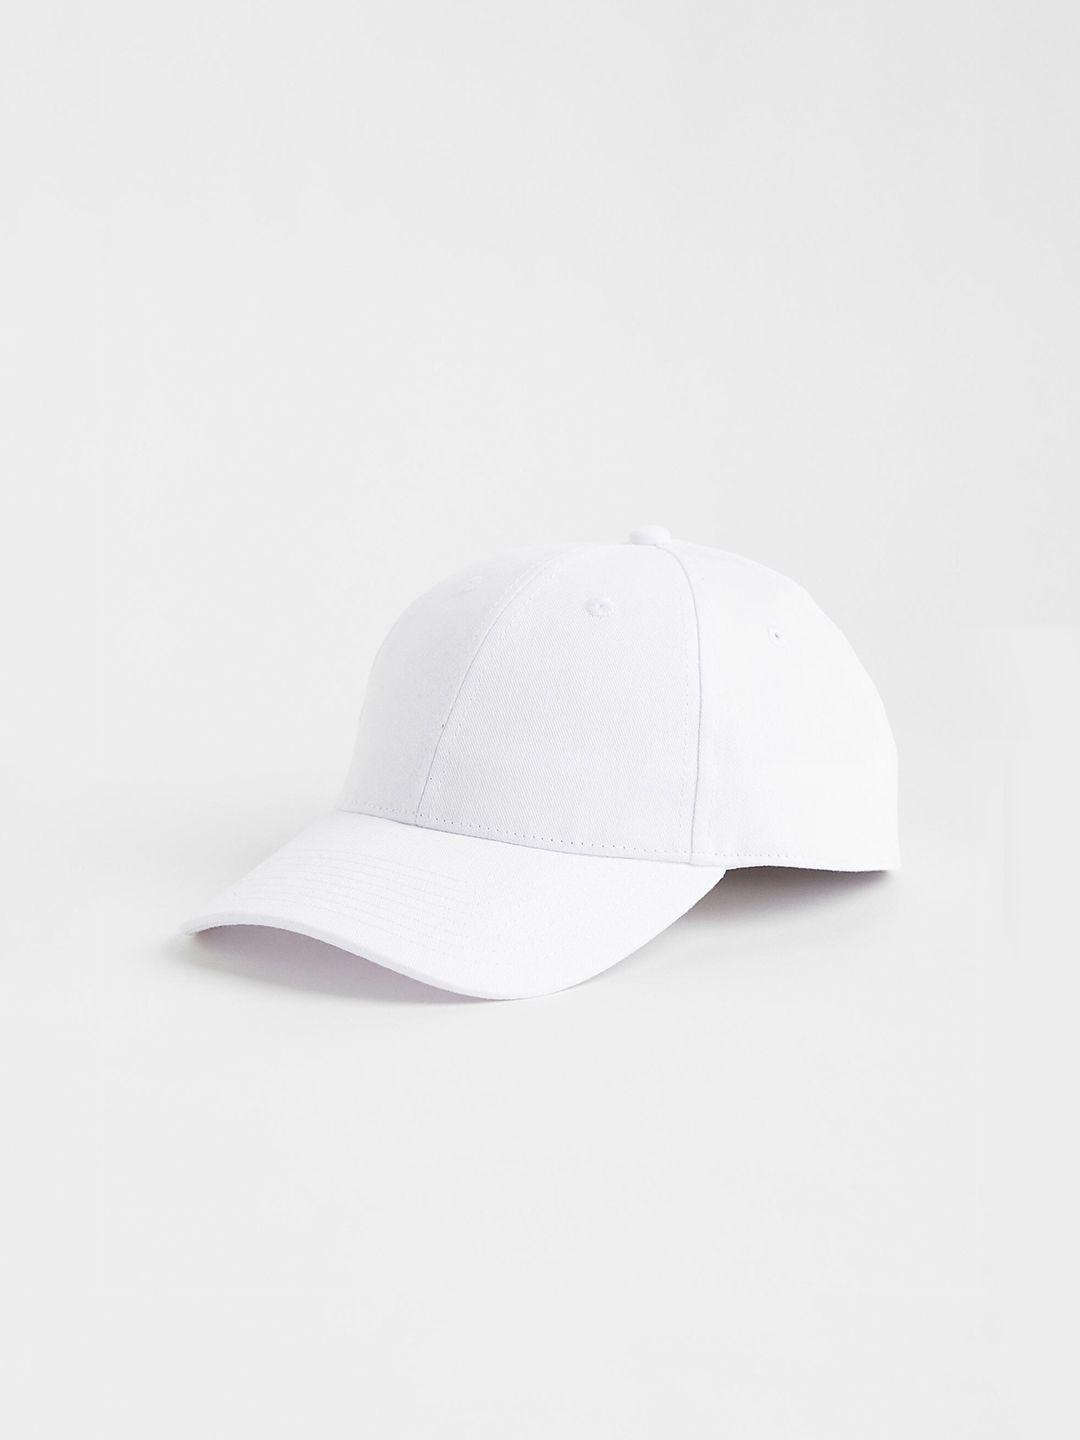 h&m men white solid cotton twill baseball cap